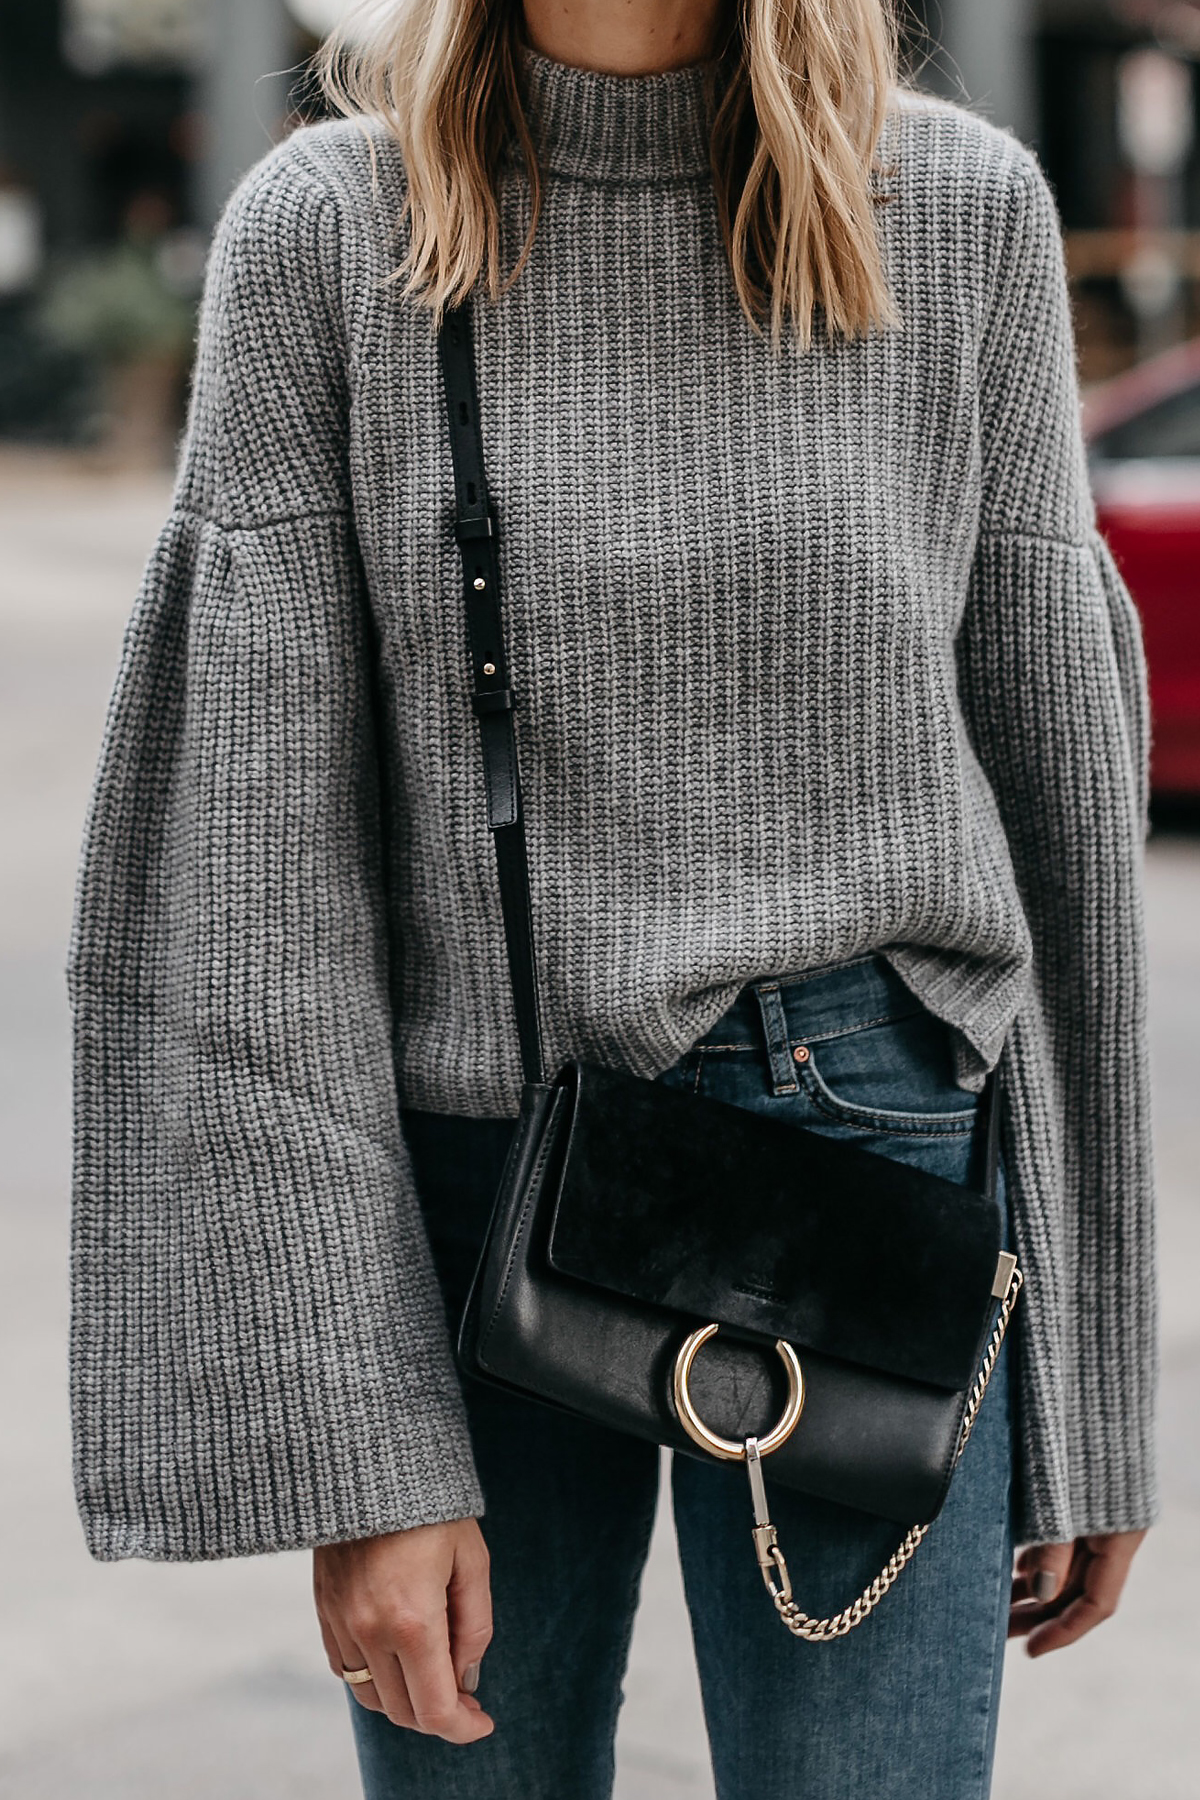 Grey Bell Sleeve Sweater Chloe Faye Black Handbag Fashion Jackson Dallas Blogger Fashion Blogger Street Style